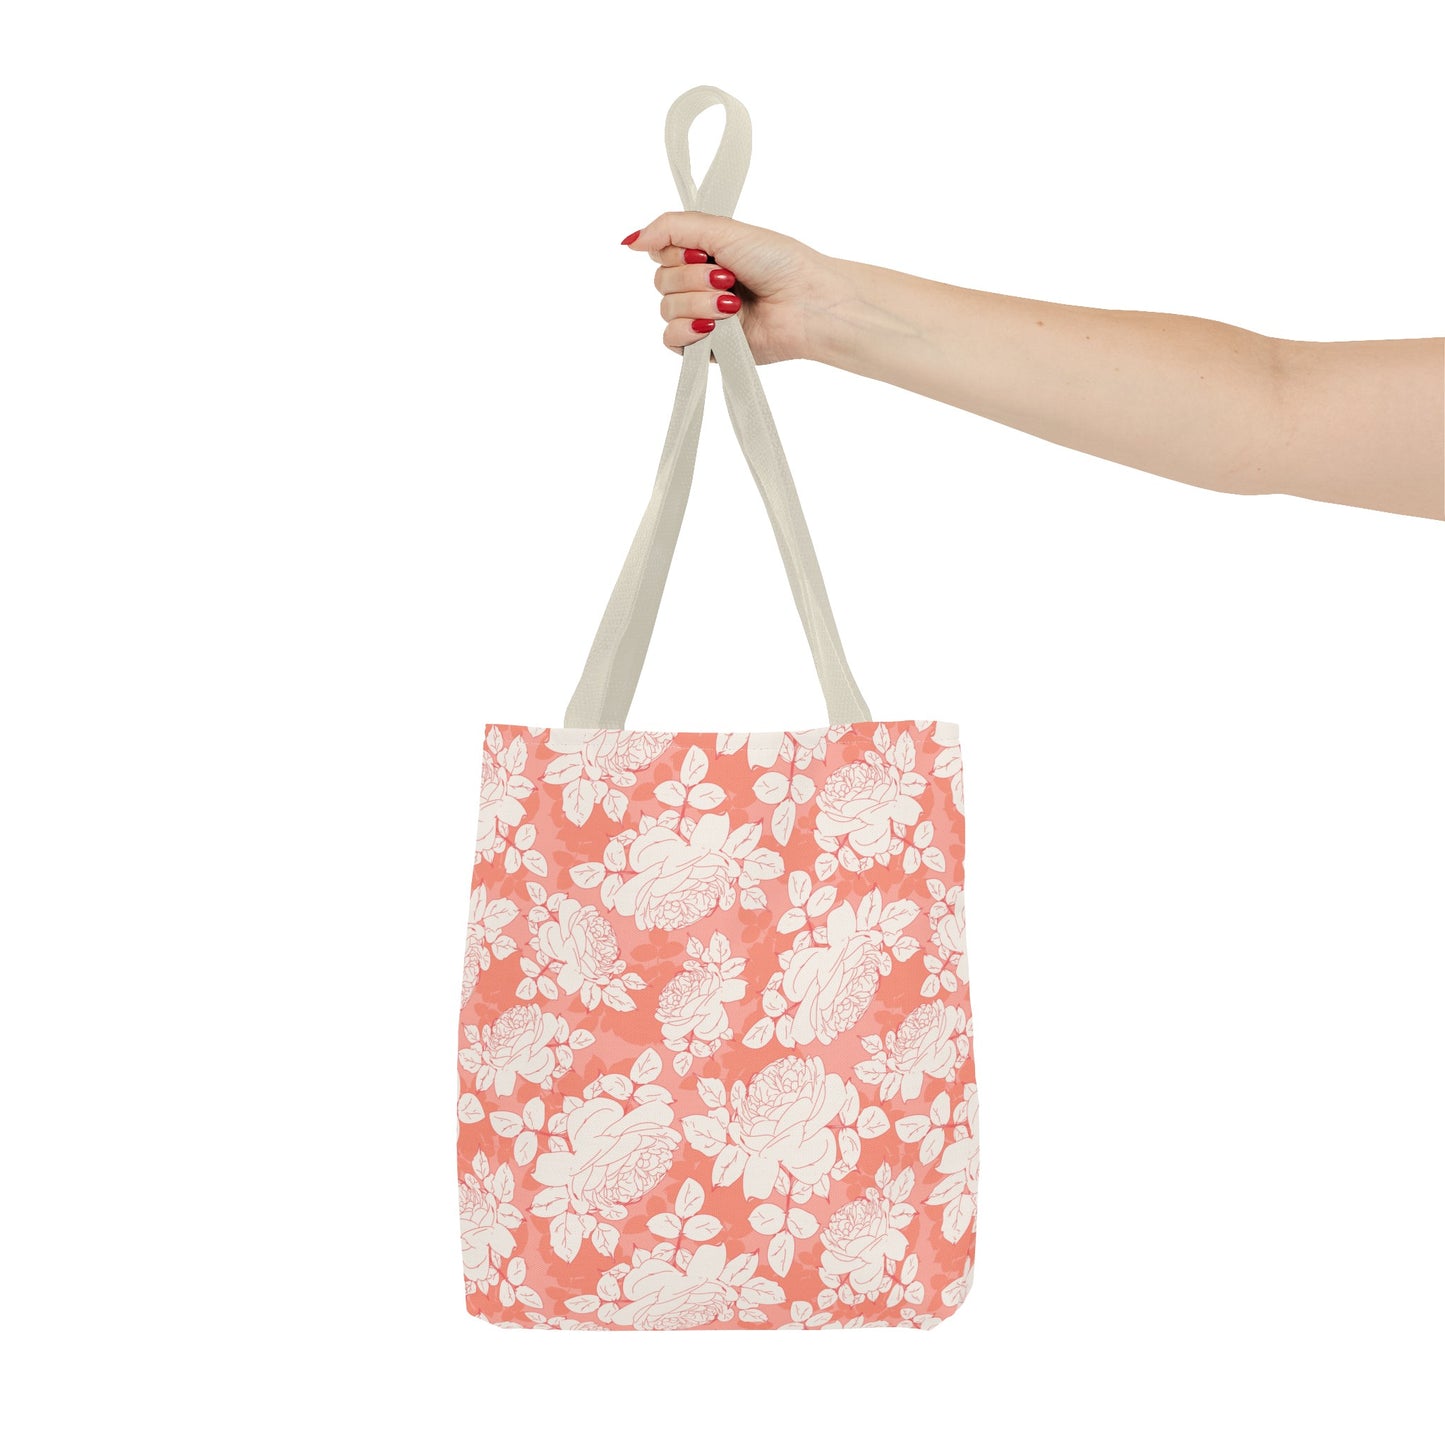 Peach and Cream Roses Tote Bag